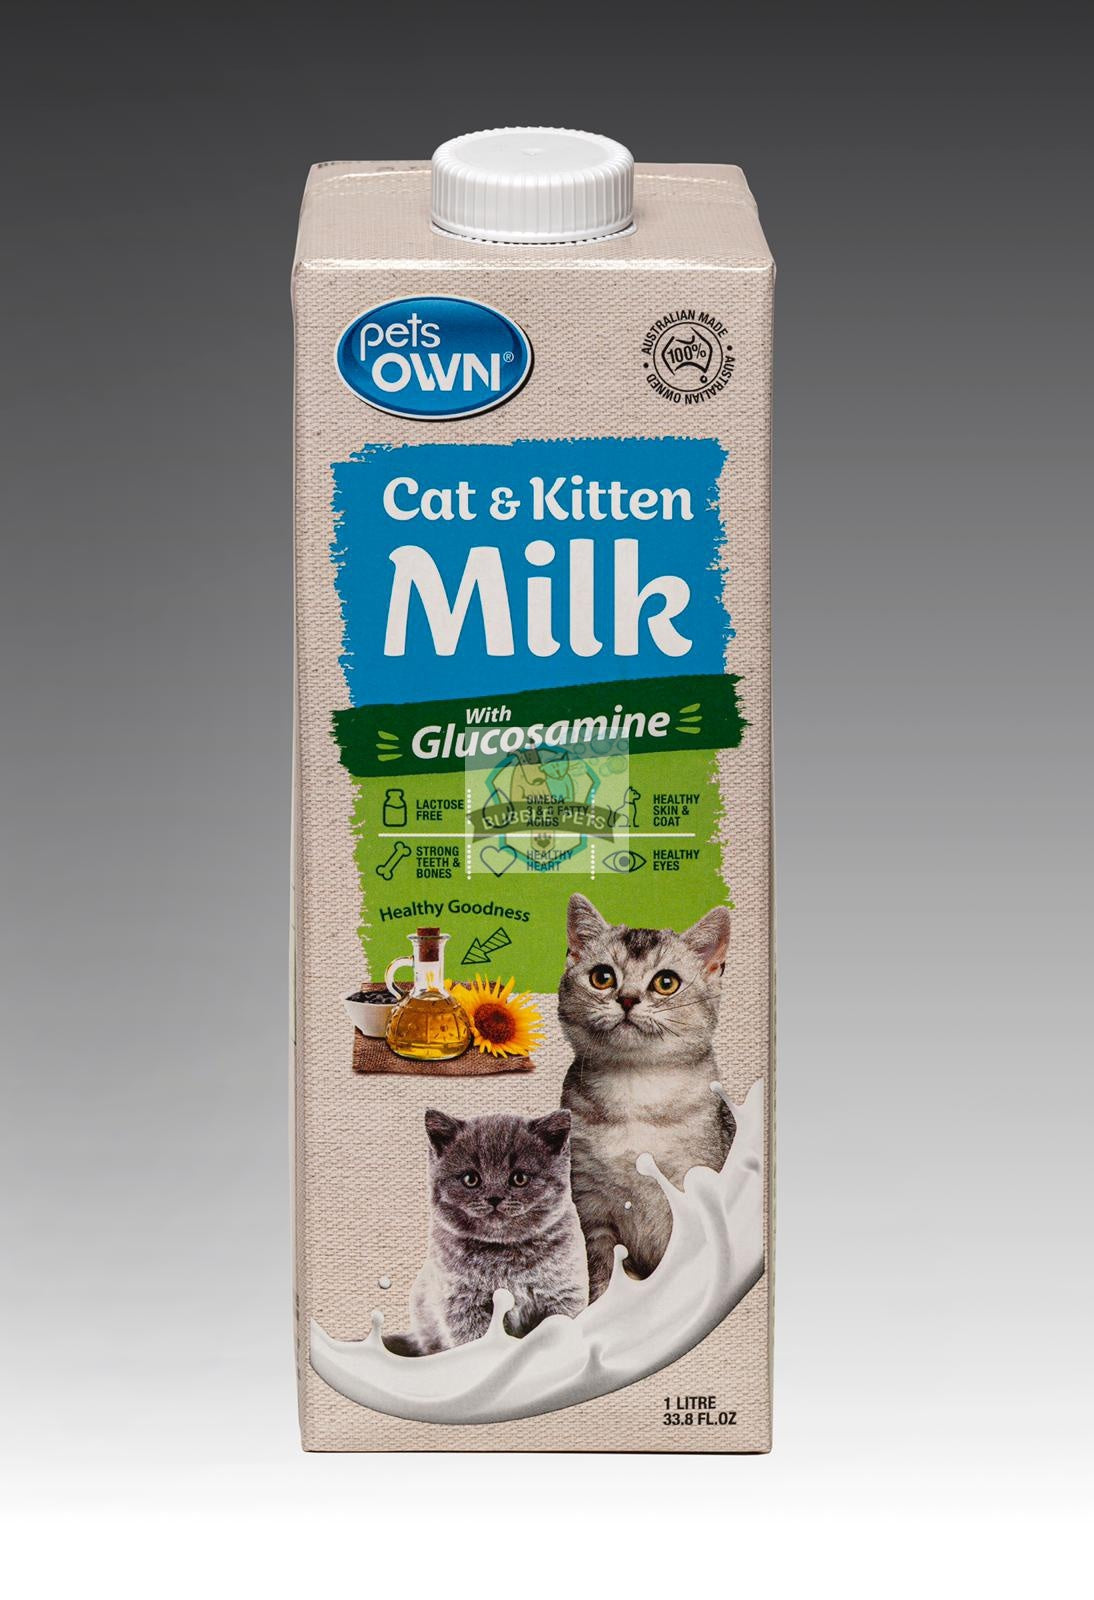 Pets Own Cat & Kitten Milk with Glucosamine